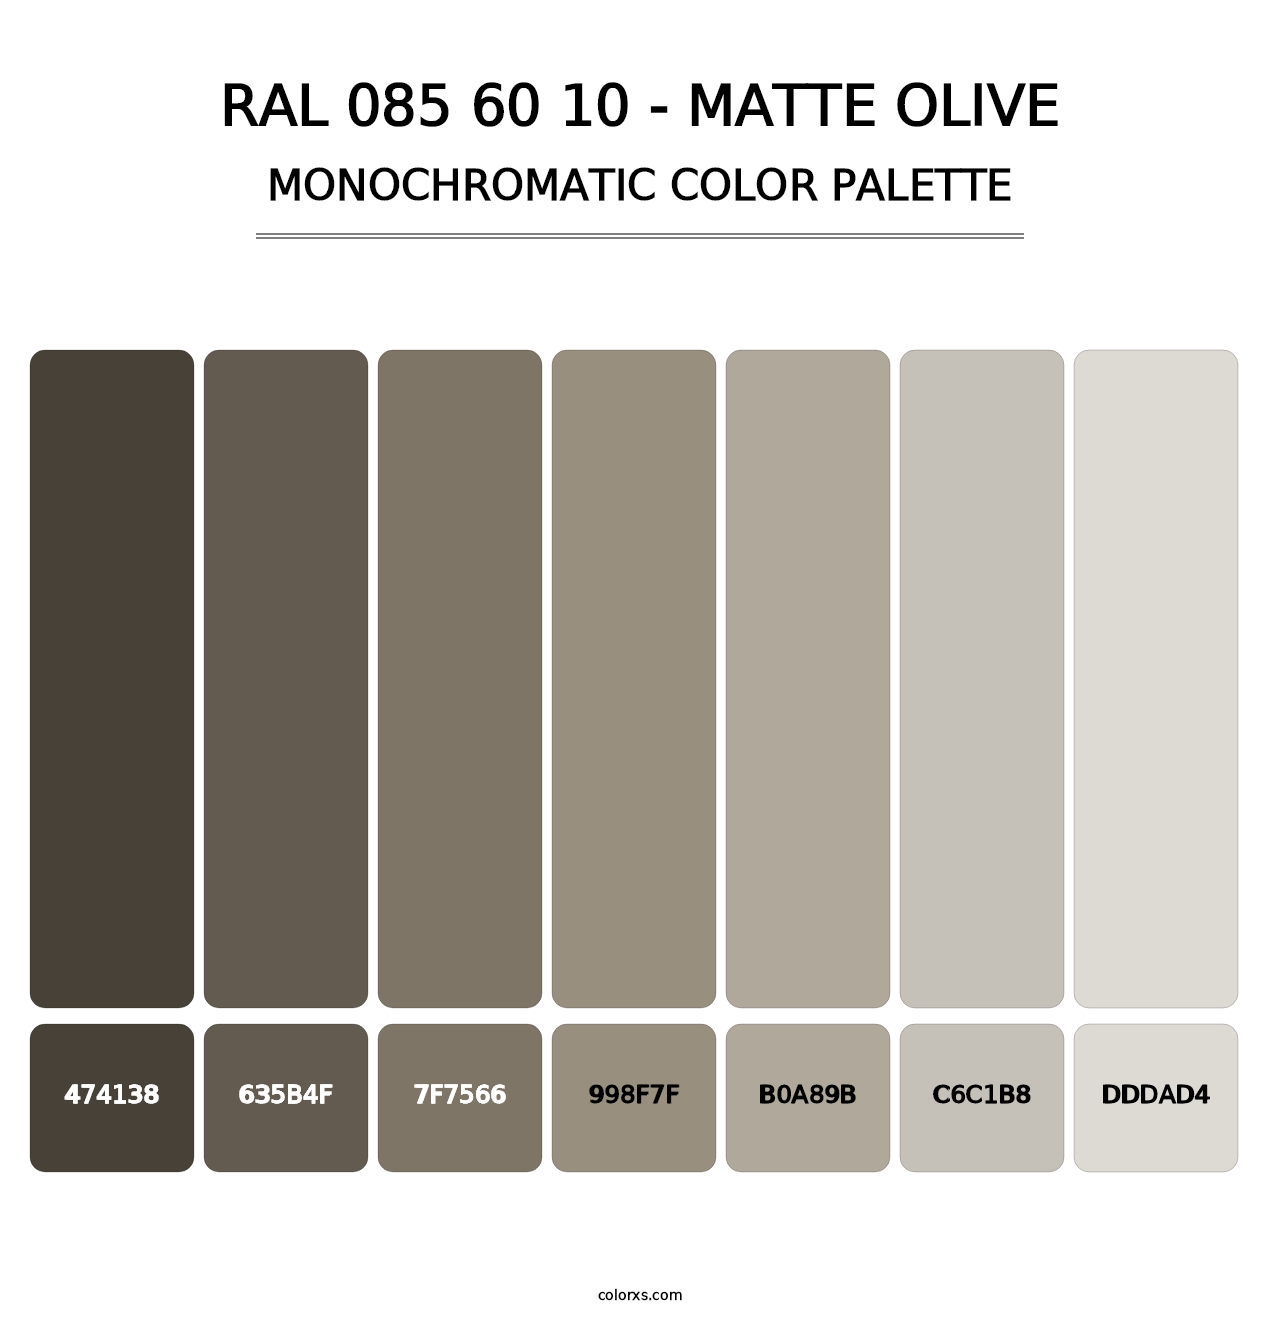 RAL 085 60 10 - Matte Olive - Monochromatic Color Palette